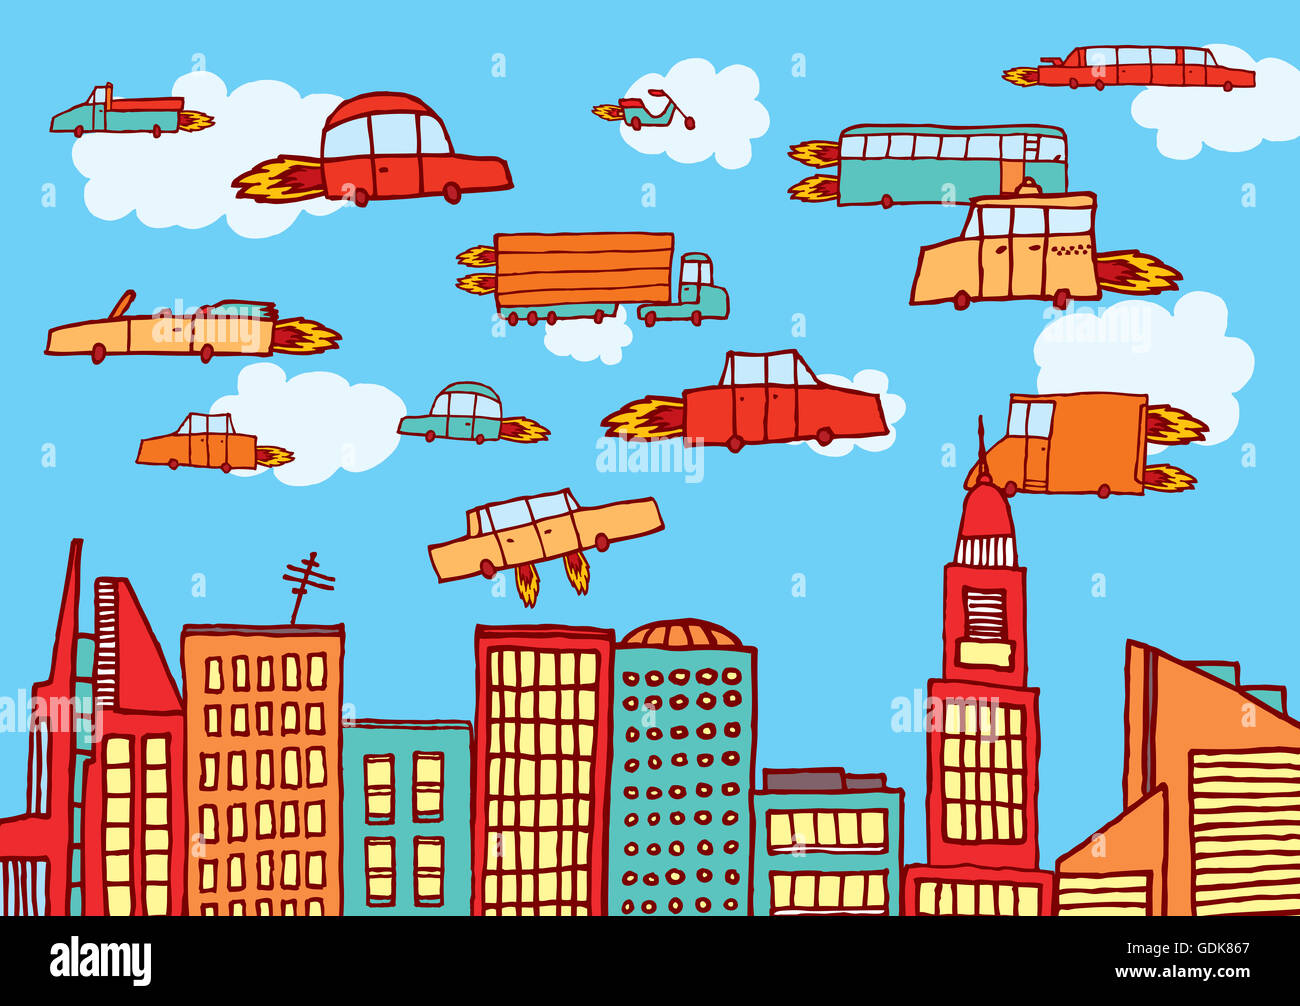 Cartoon illustration of future urban air transportation or flying cars Stock Photo